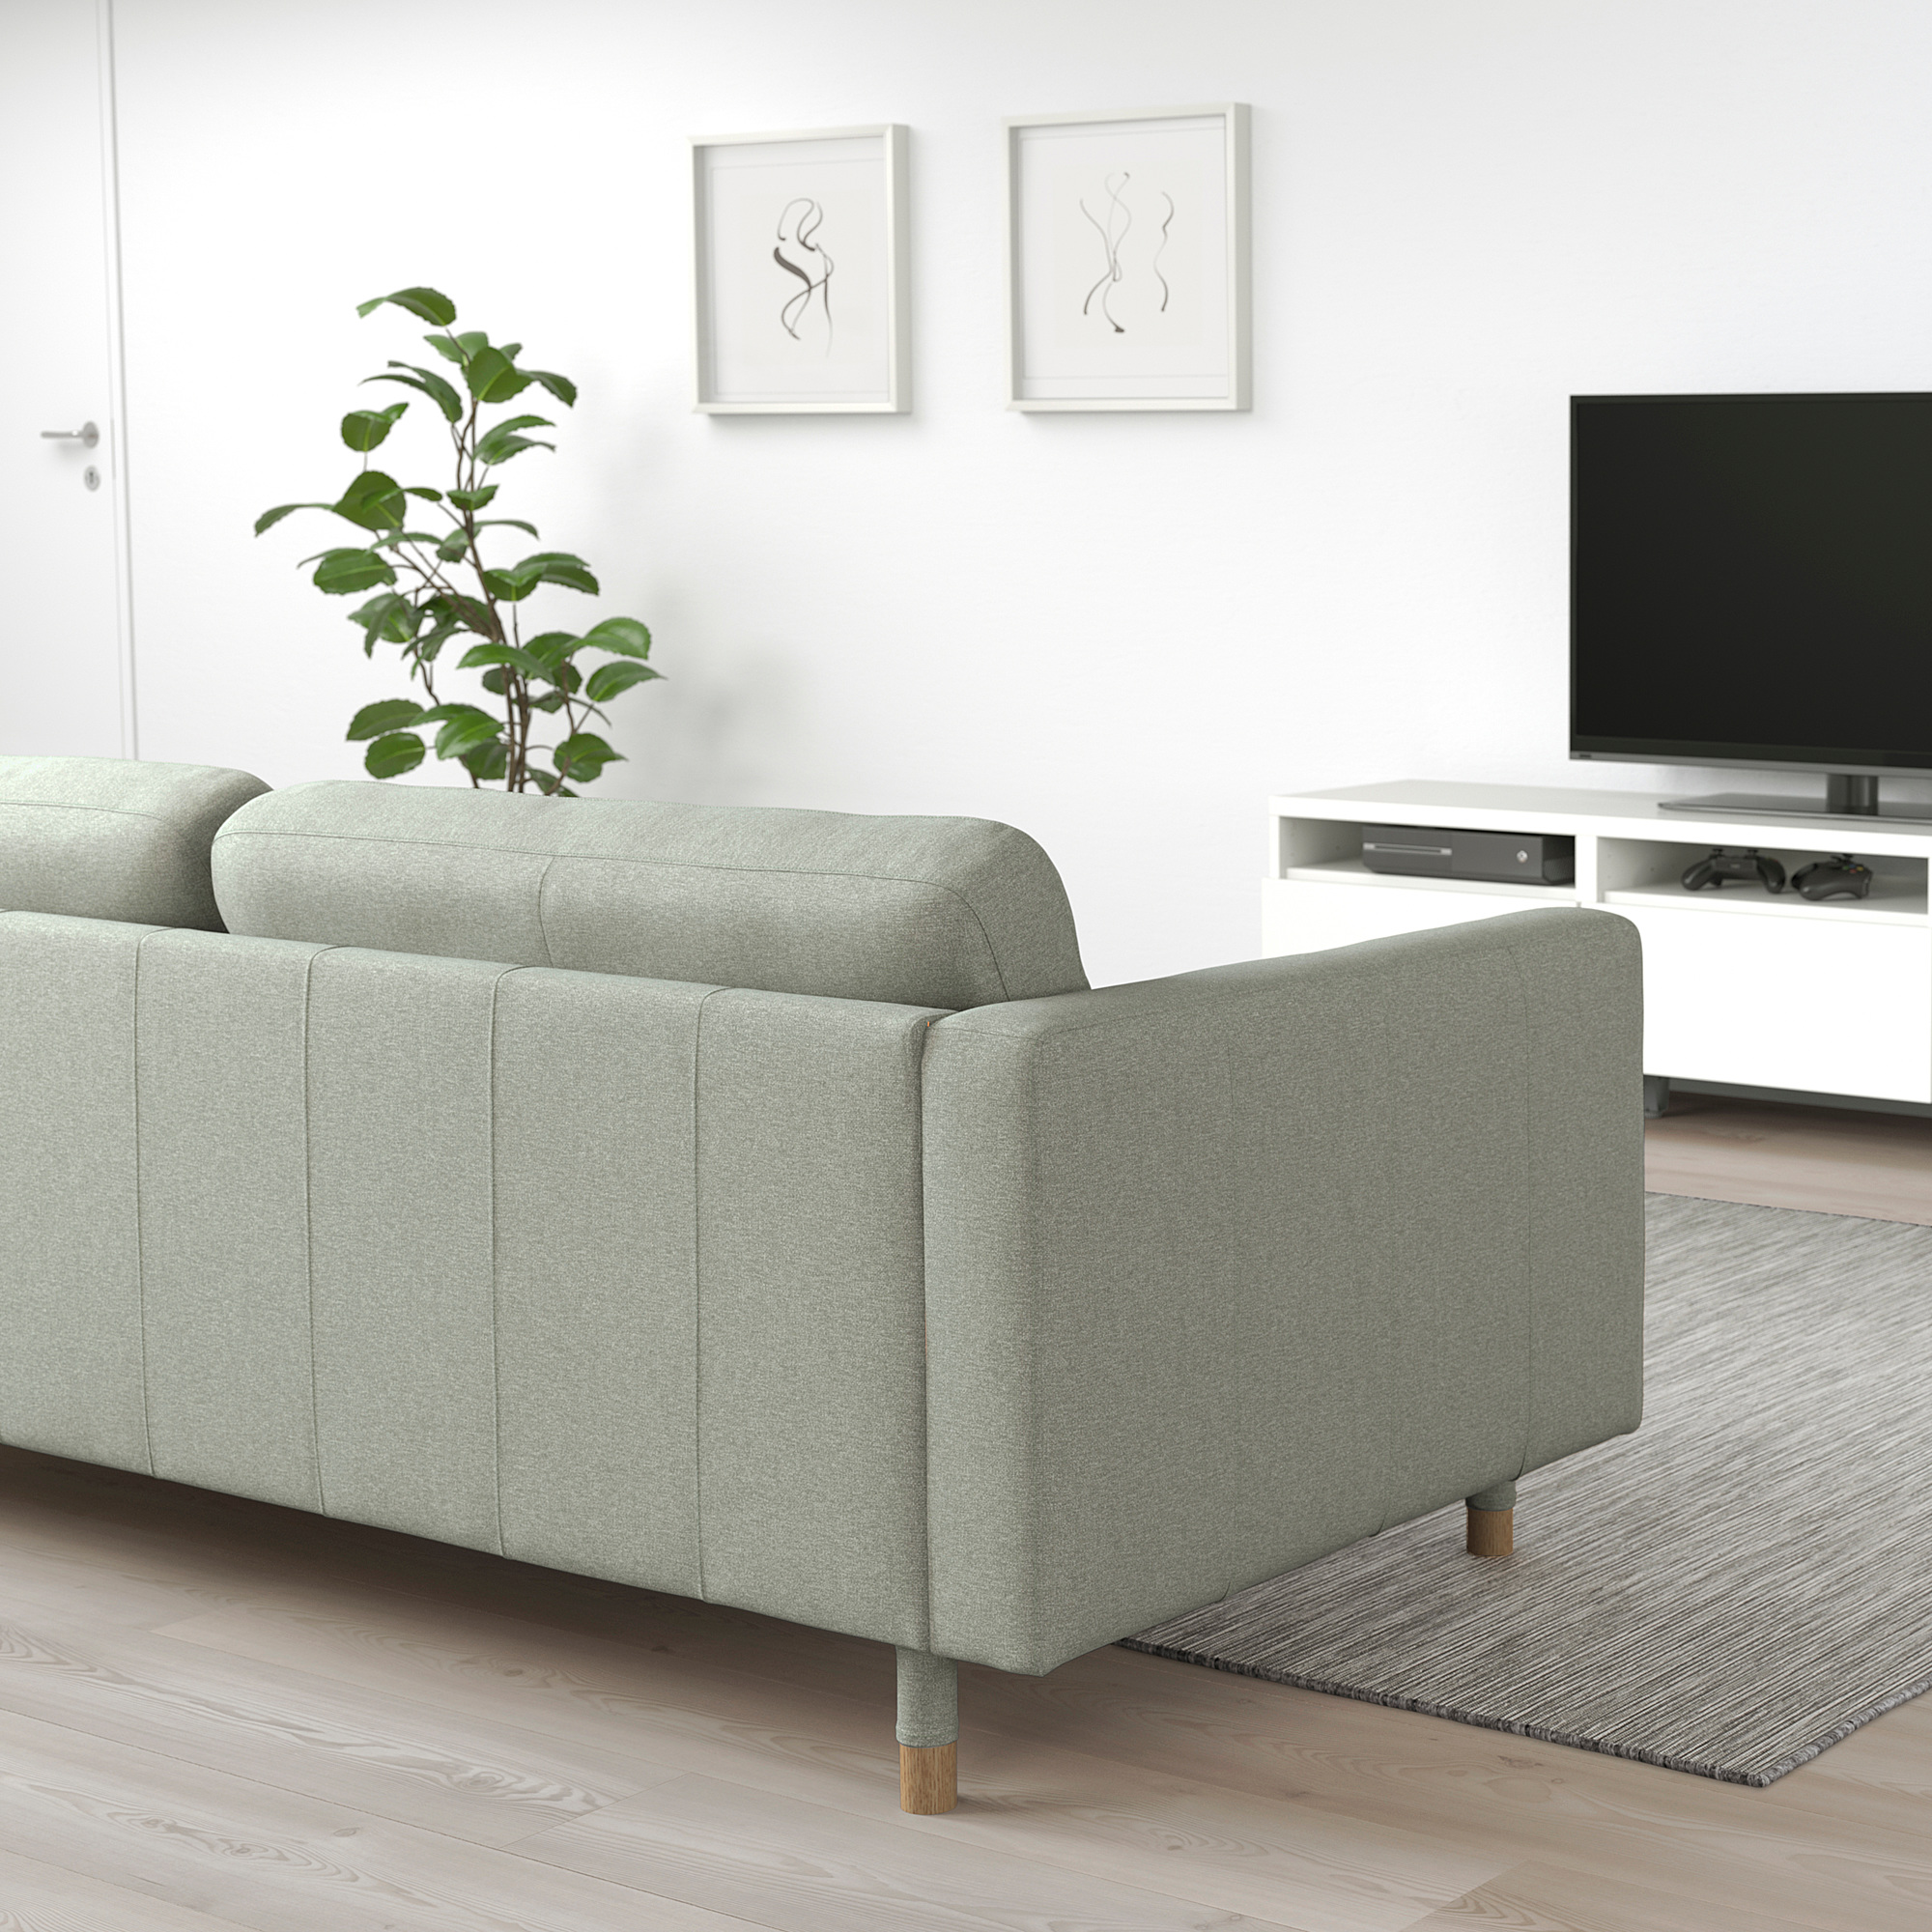 LANDSKRONA 3-seat sofa